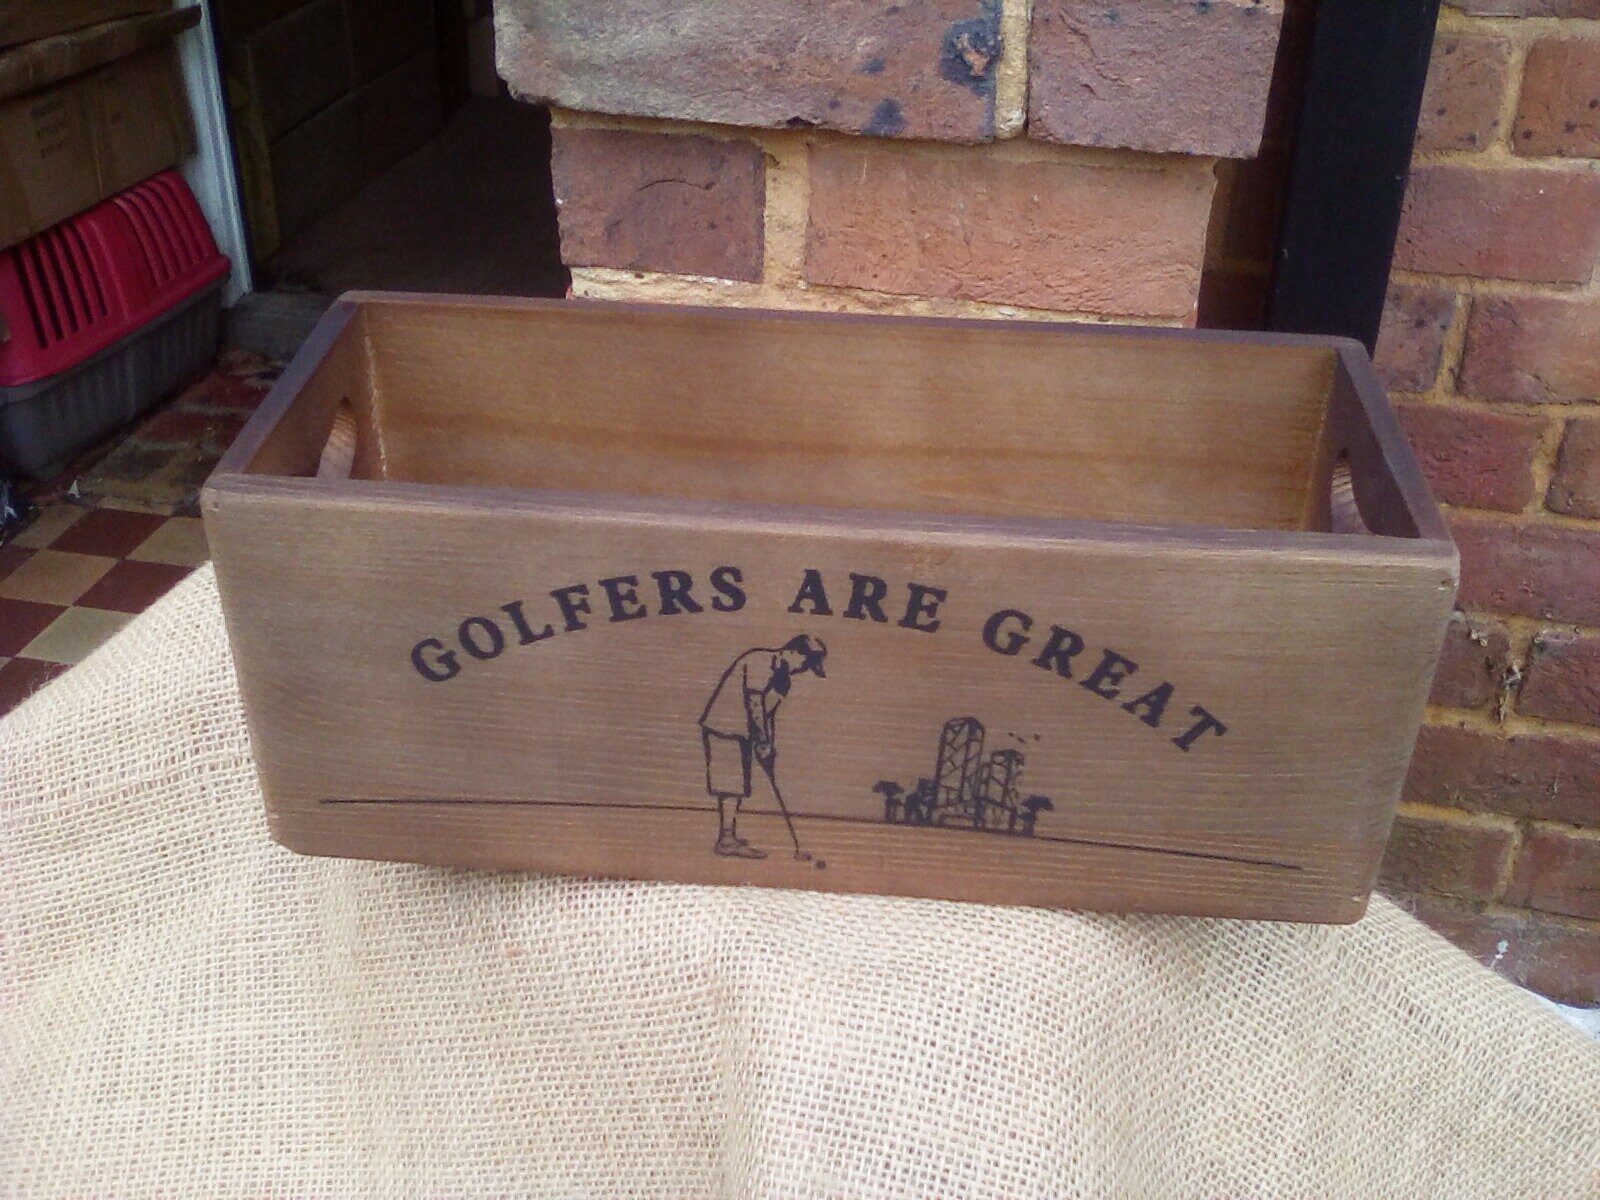 Golf-Set Exklusive Geschenk-Box aus Holz - inkl. Doming